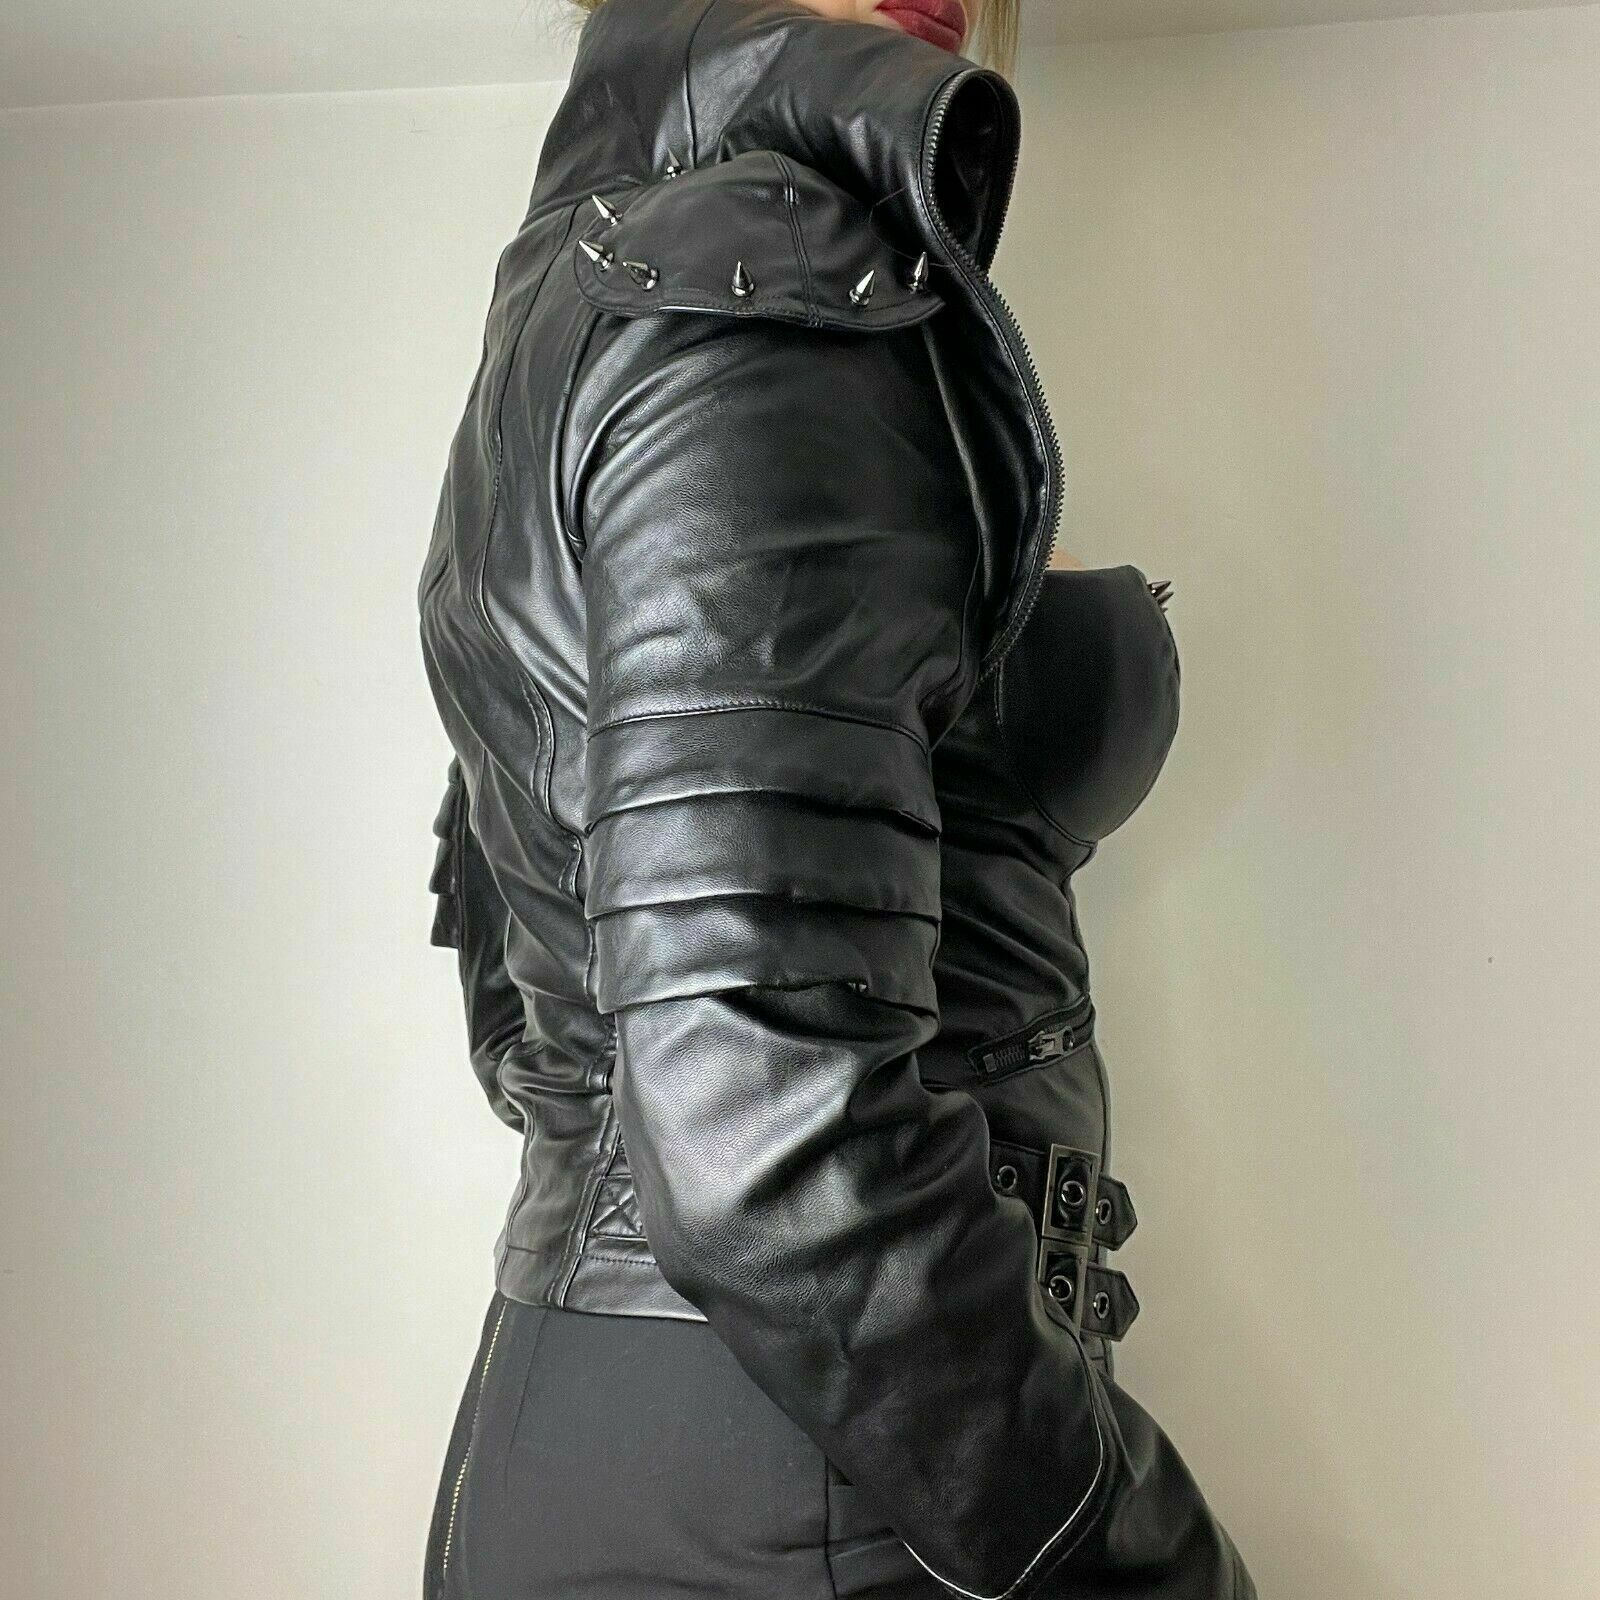 Punk Rave: Punk Gothic Size XL 12 Black Leather Studded Jacket Alt egirl Goth - Luxurena Leather